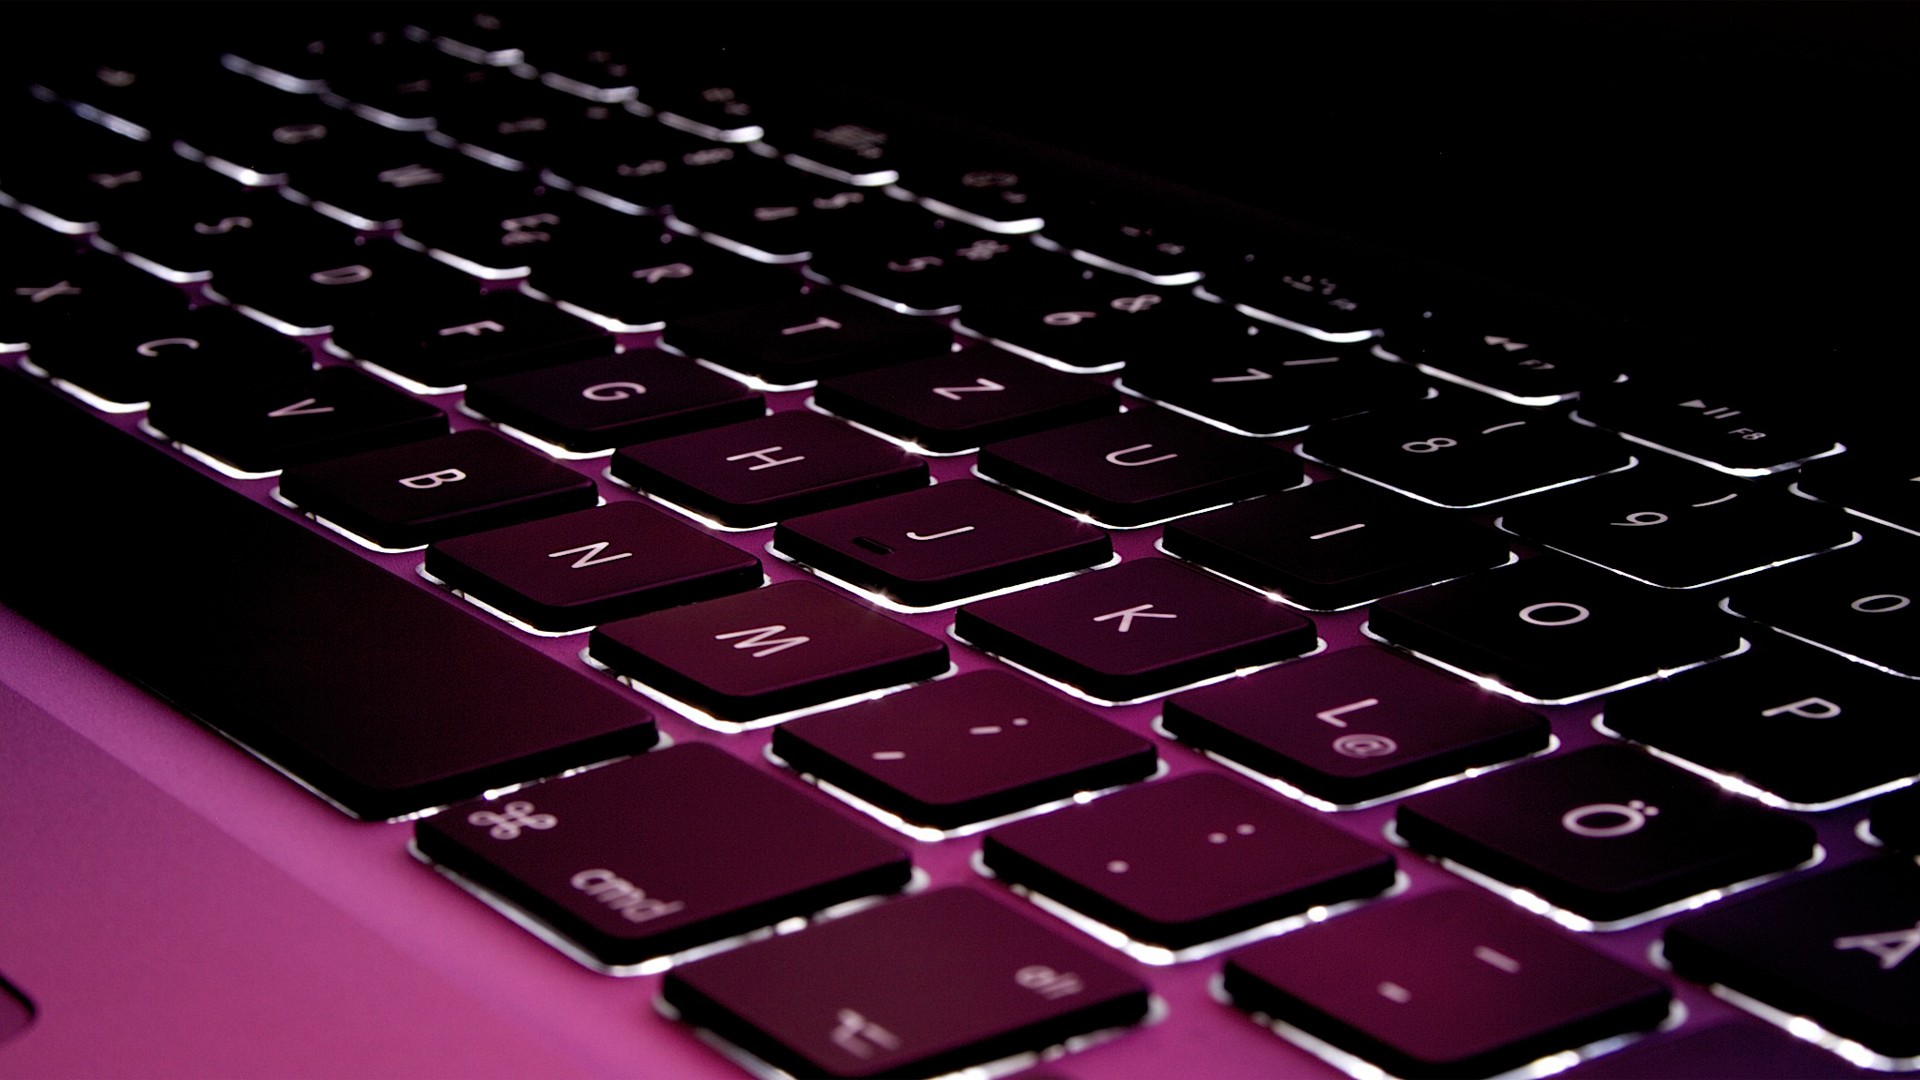 MacBook Pro purple colored keyboard HD Wallpaper » FullHDWpp - Full ...